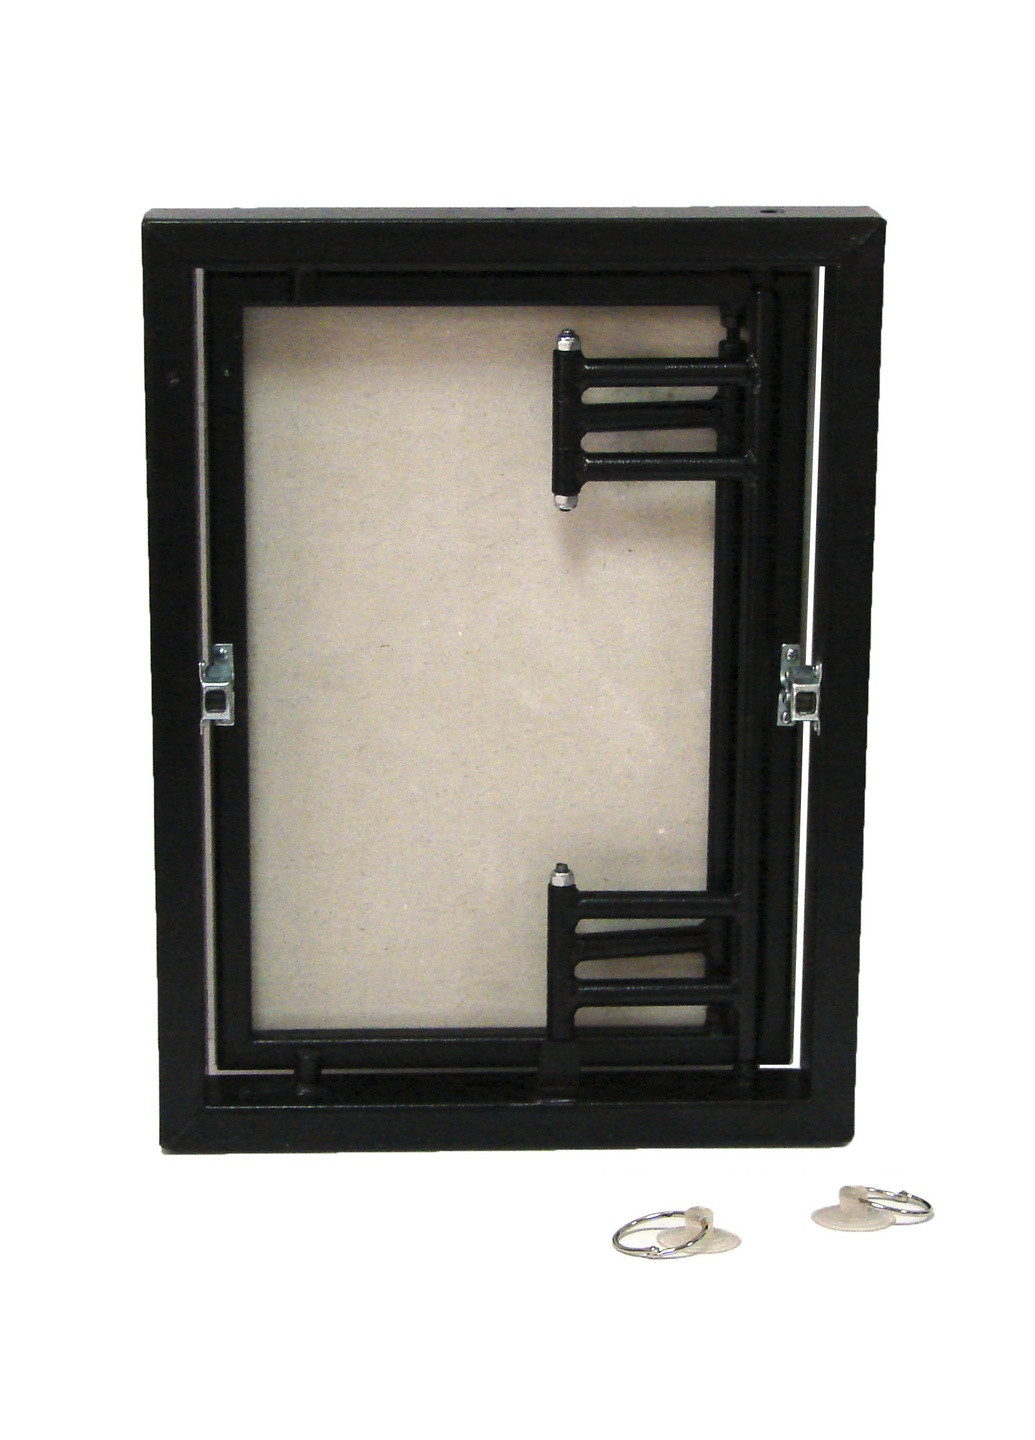 Ревизионный люк скрытого монтажа под плитку фронтальнораспашного типа 400x600 ревизионная дверца для плитки (1224) S-Dom (266339661)